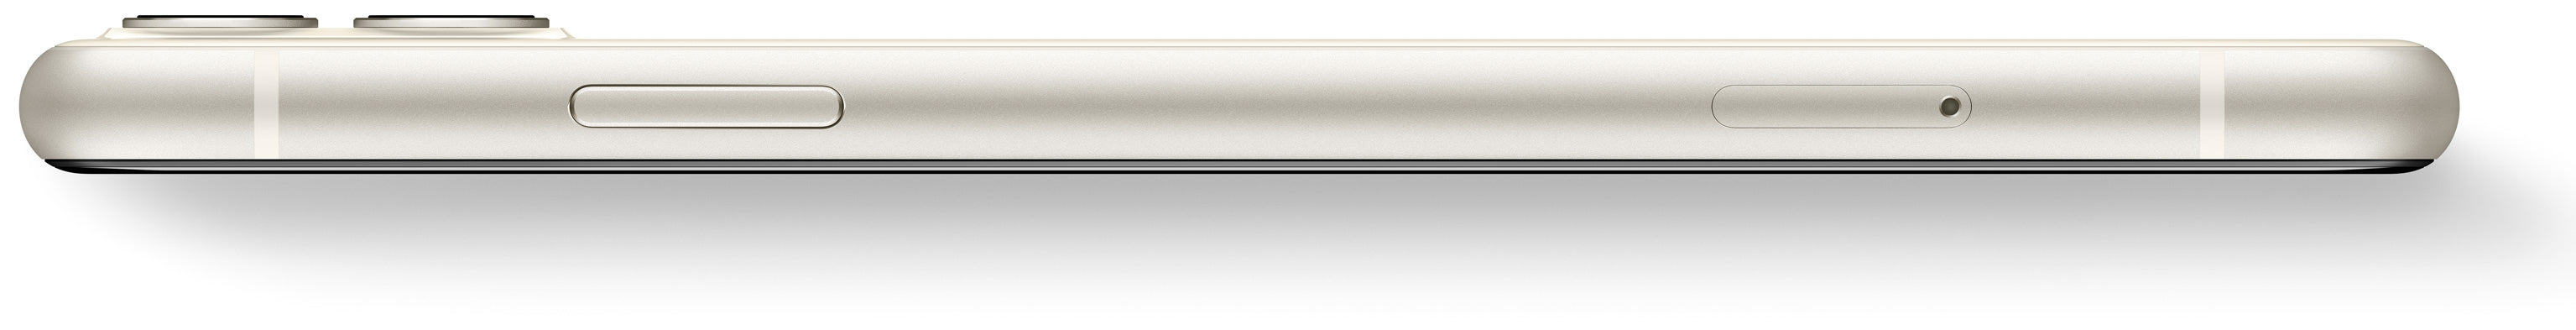 Apple iPhone 11 64gb White EU - 5